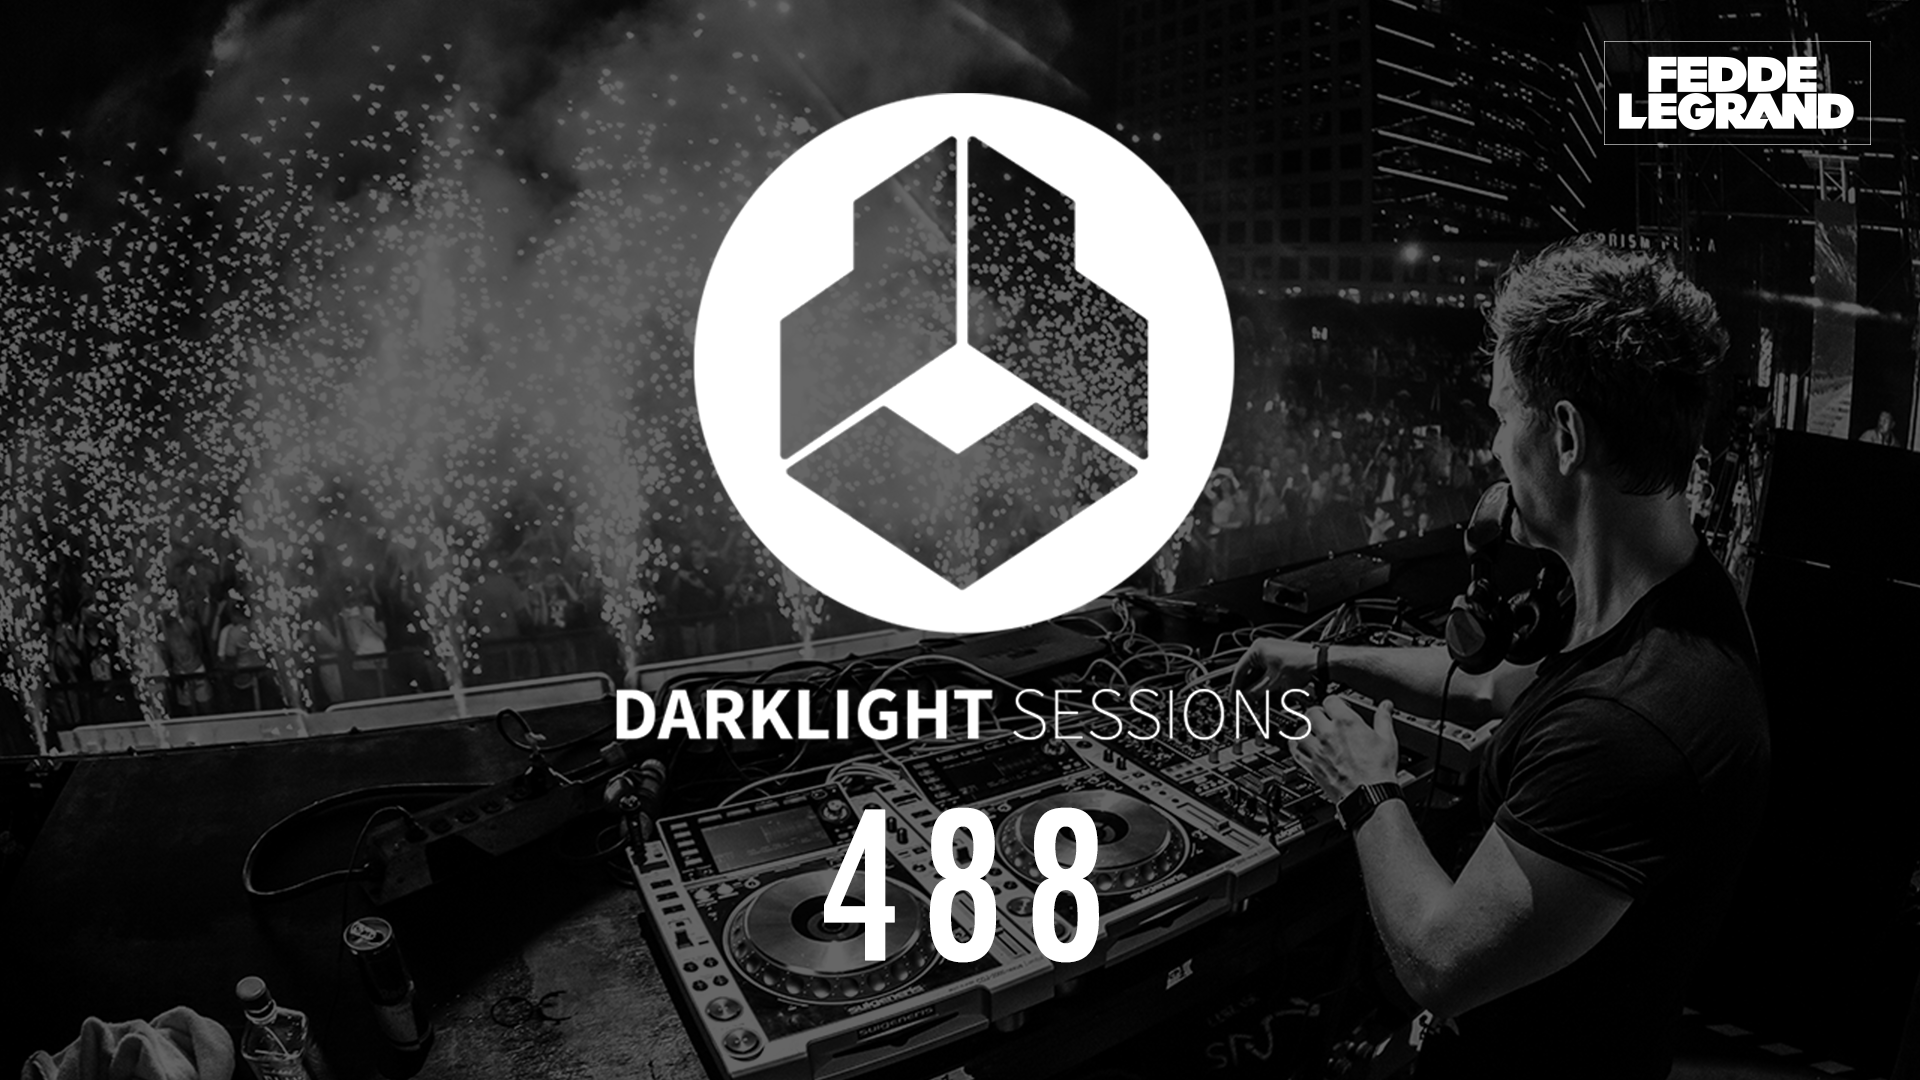 Darklight Sessions 488